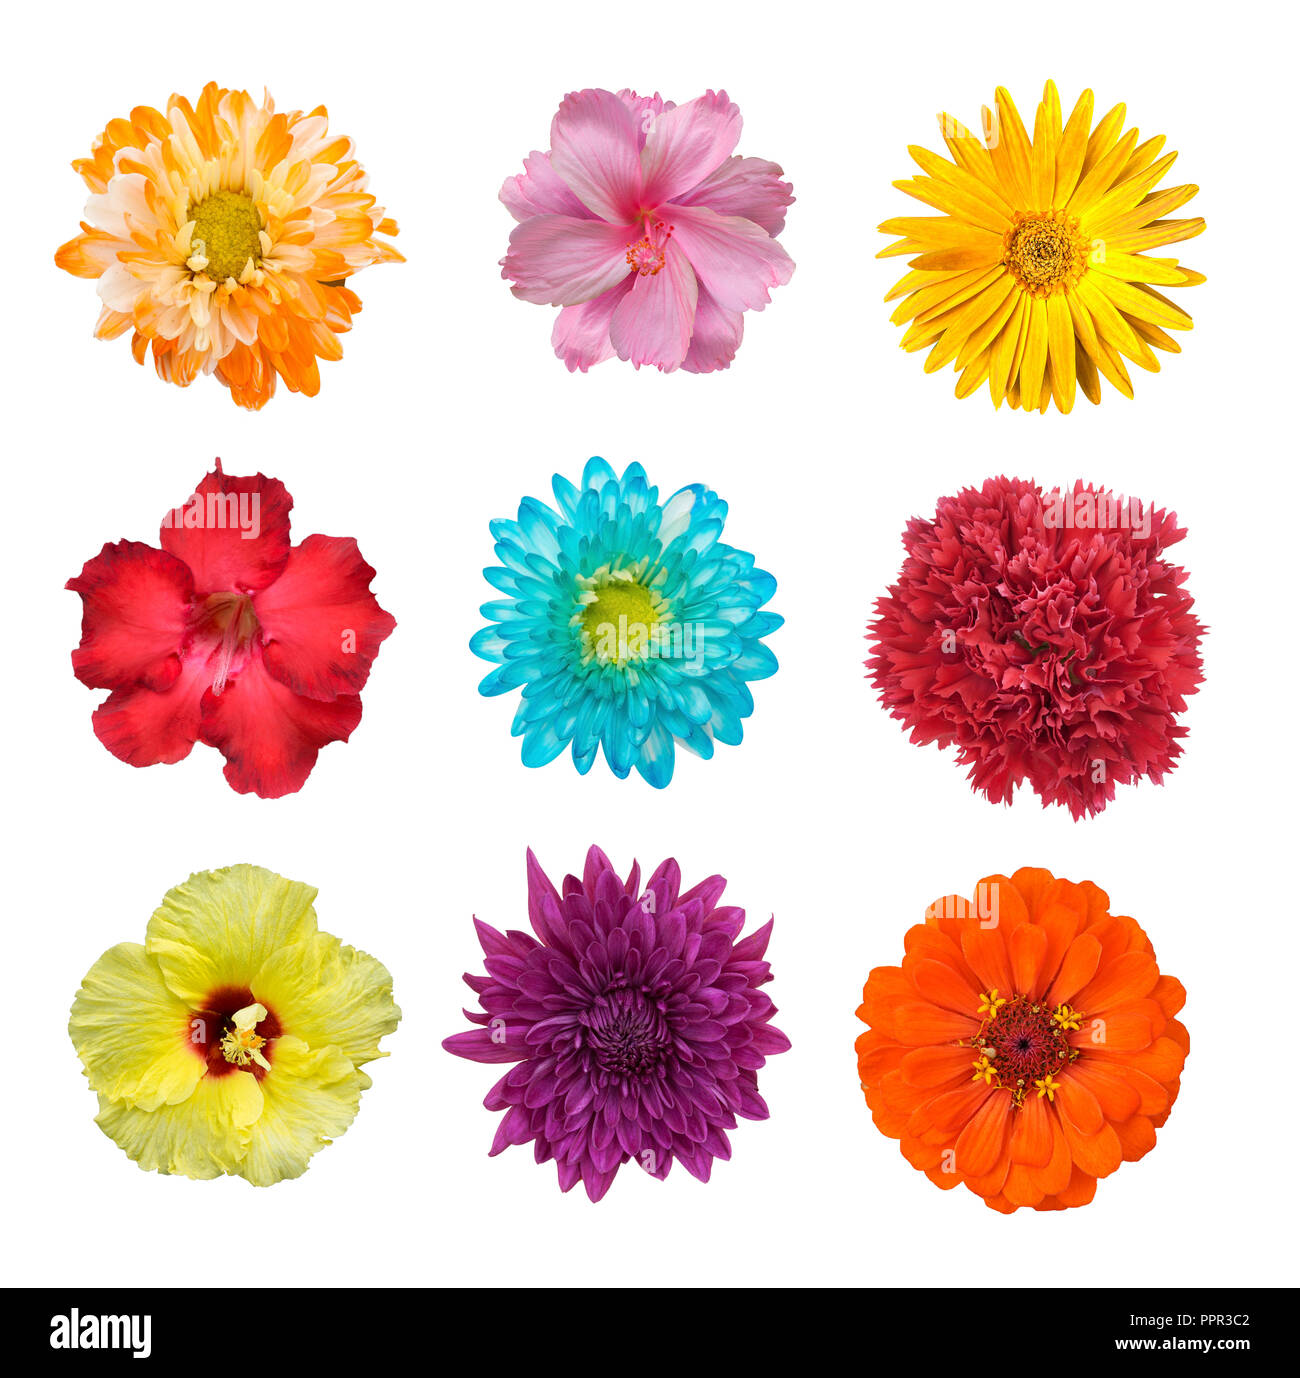 Varias flores fotografías e imágenes de alta resolución - Alamy